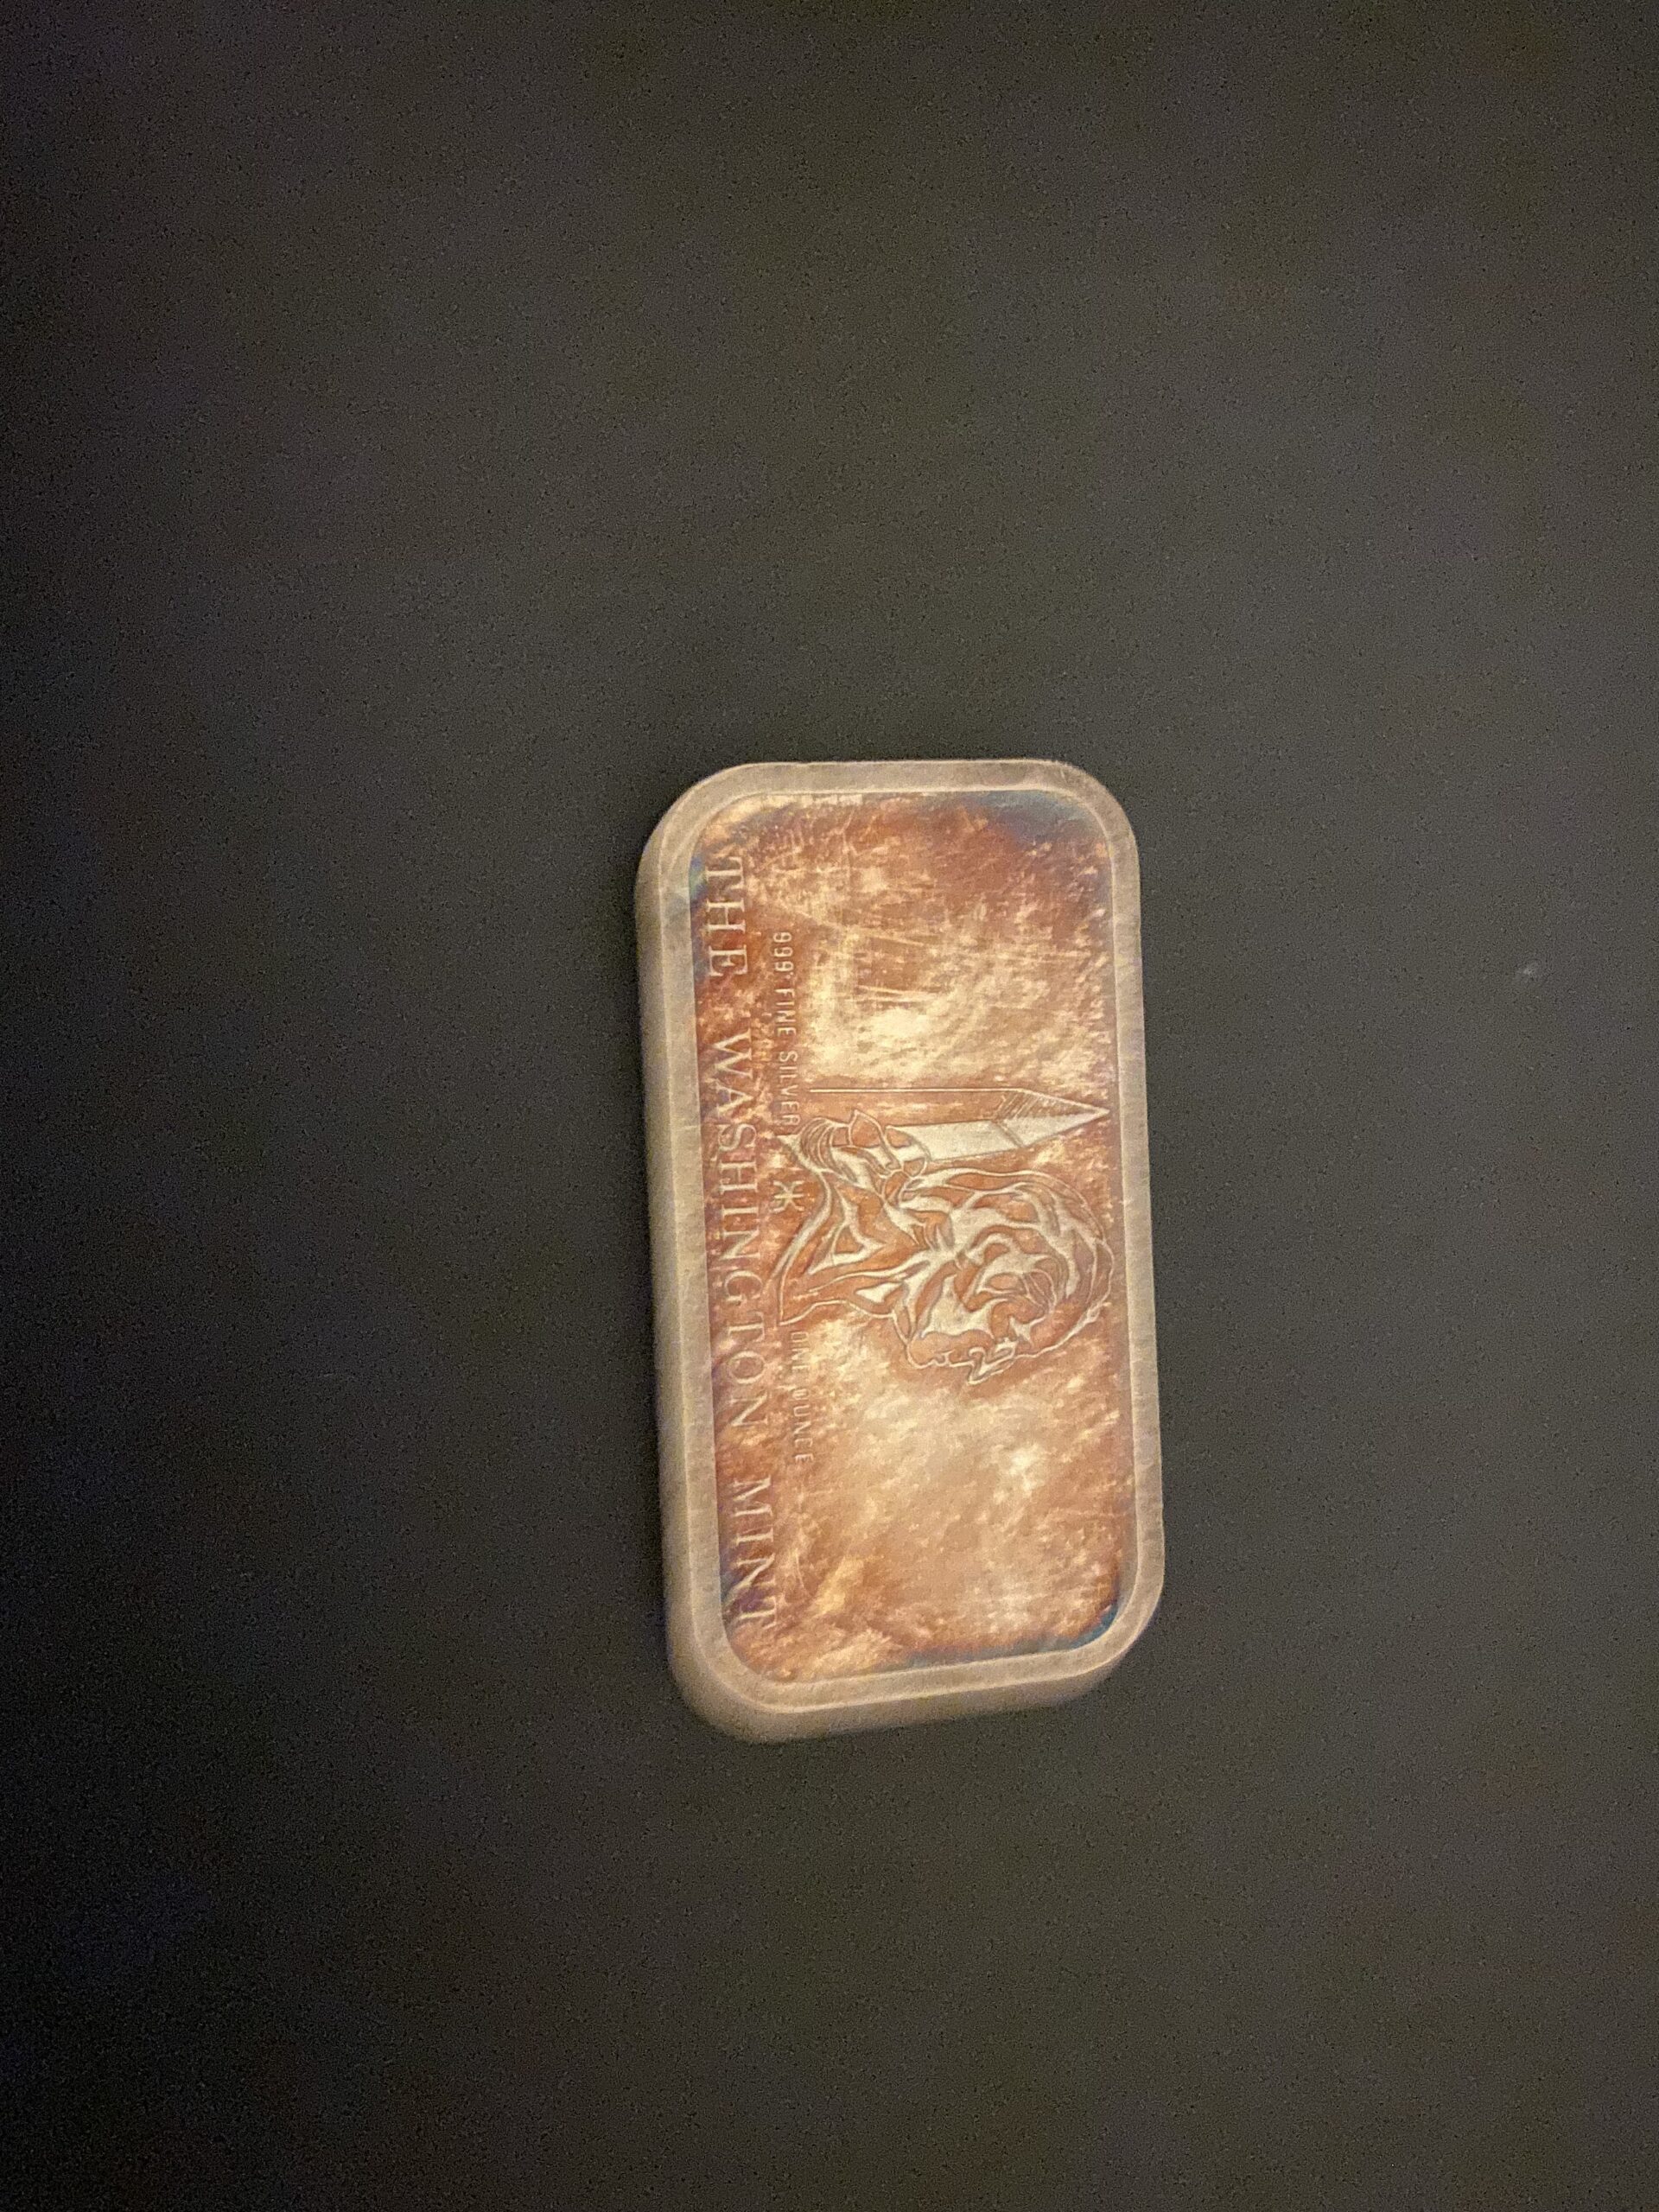 1 oz silver bar (The Washington Mint)